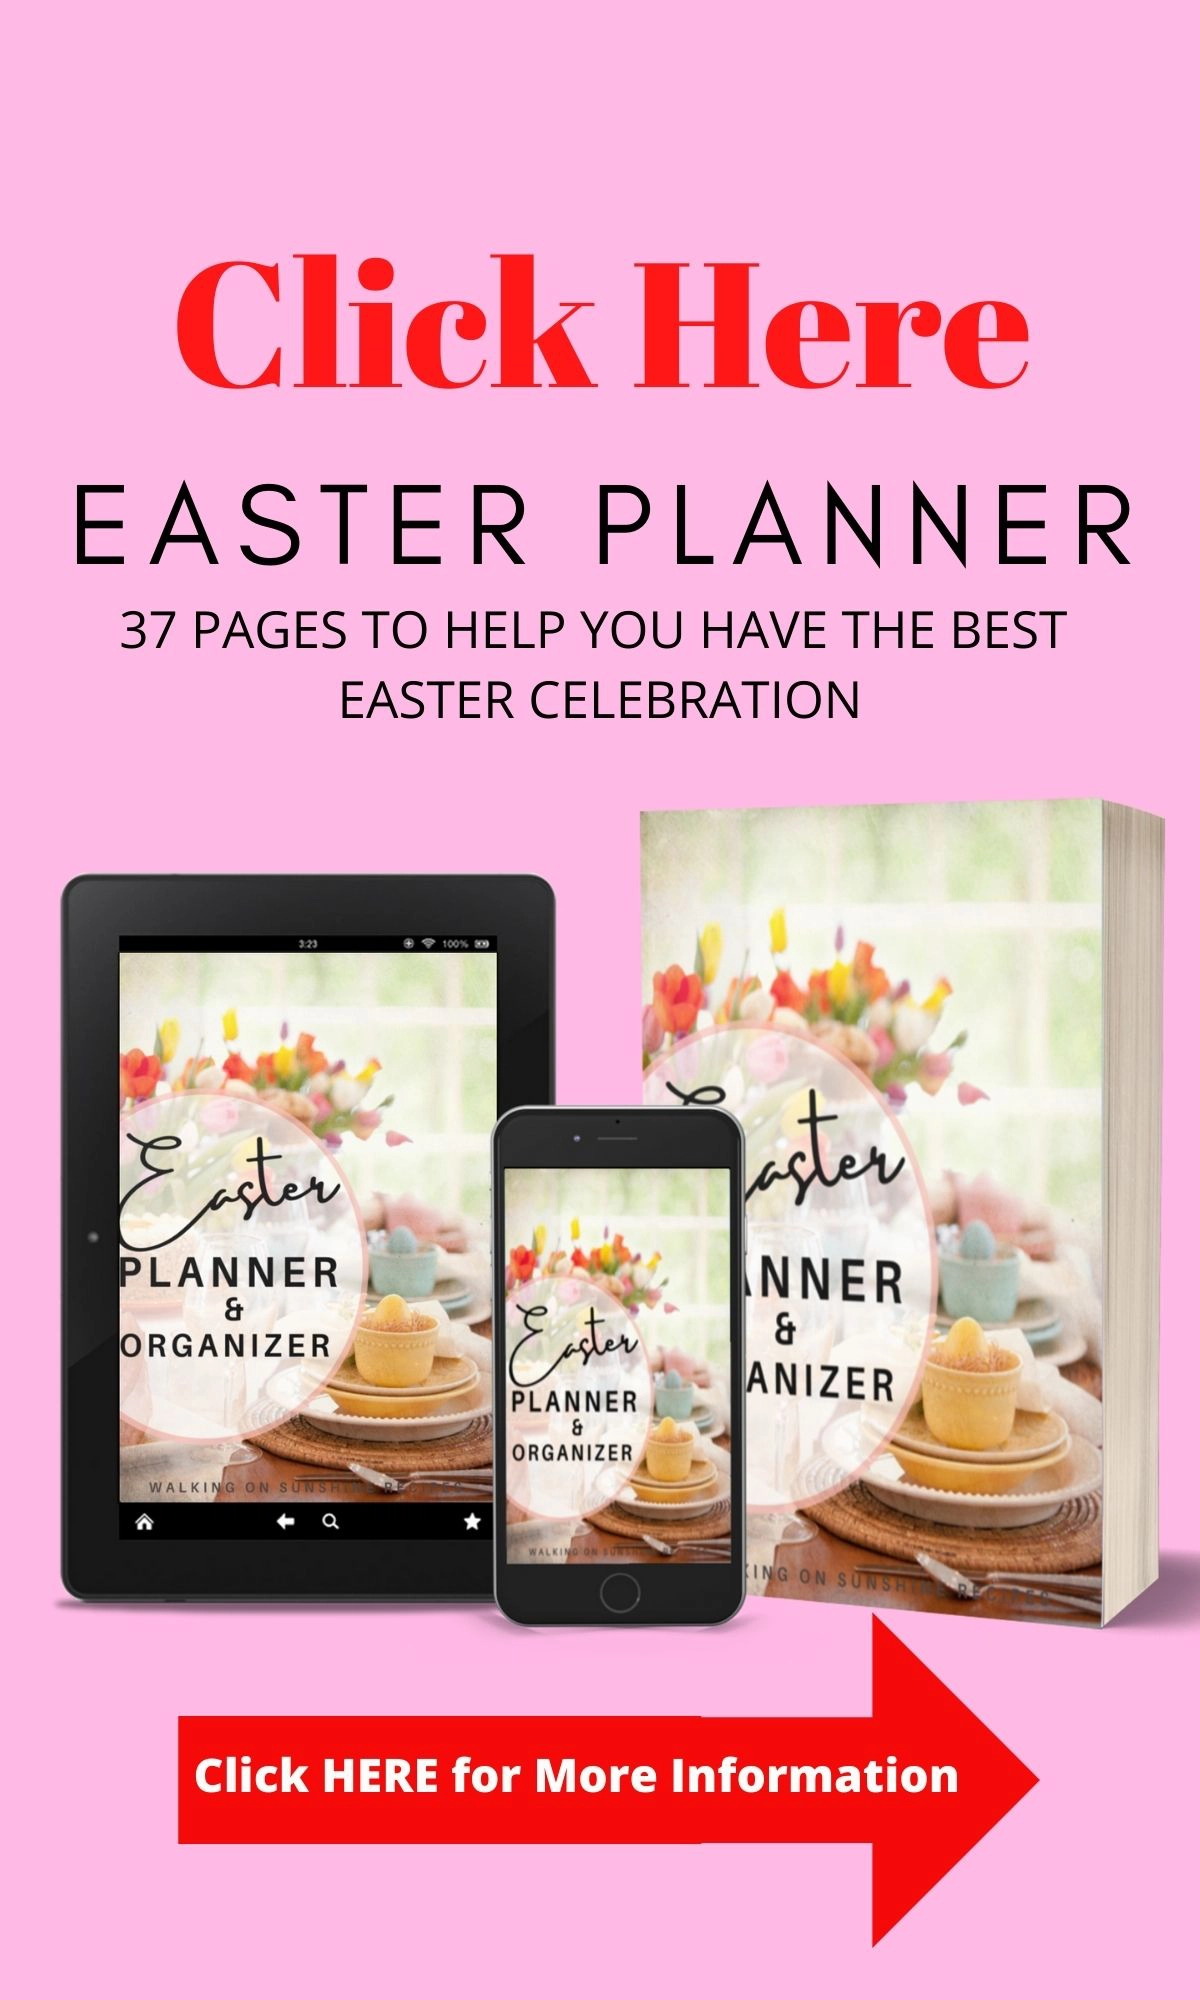 Easter-Planner-ggnoads.png LONG Blog Promo